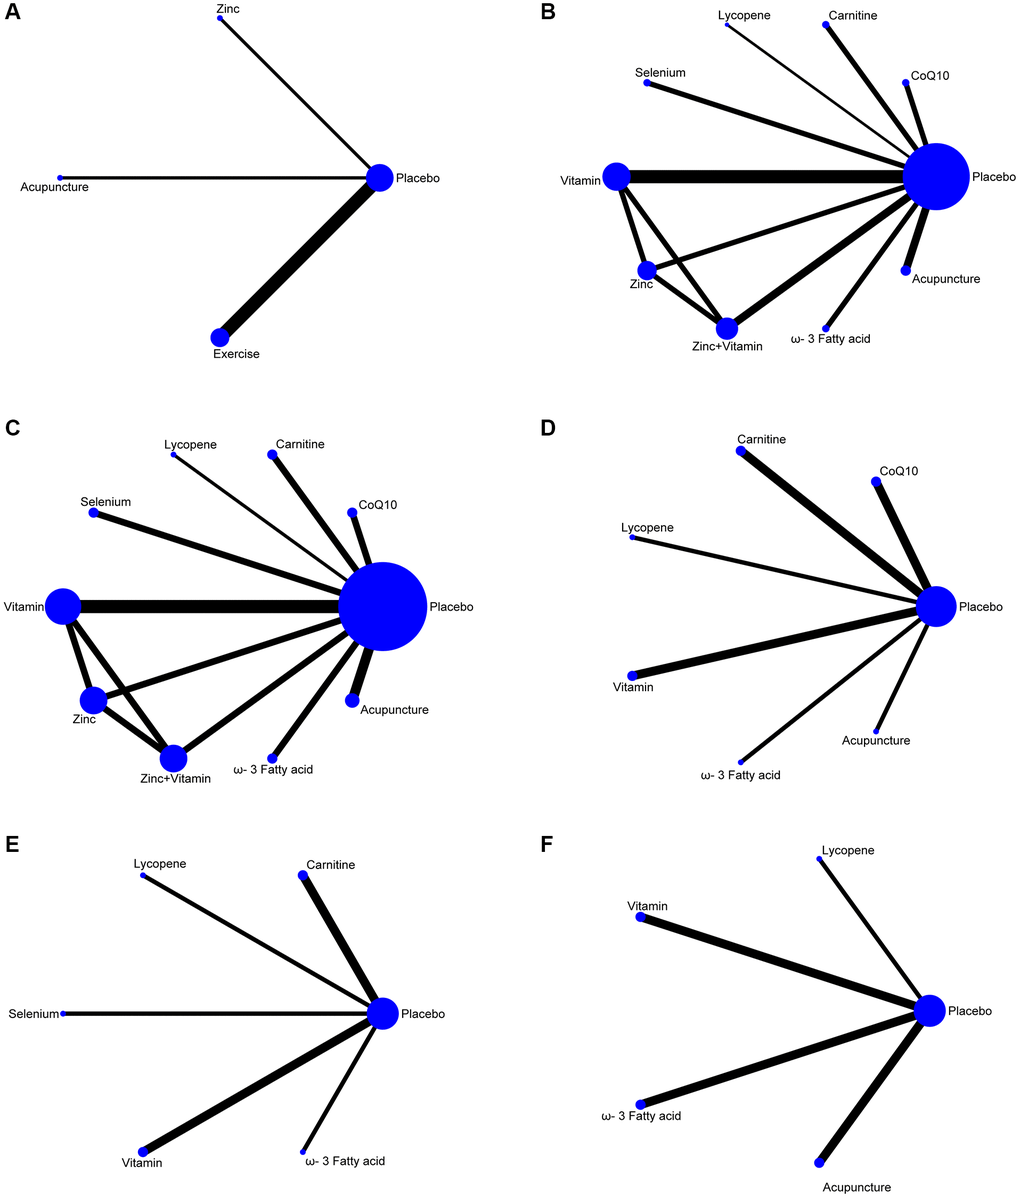 Network plots of non-pharmaceutical interventions on sperm parameters. (A) Pregnancy rate. (B) Sperm concentration. (C) Sperm total motility. (D) Sperm forward motility. (E) Sperm quality. (F) Sperm count.